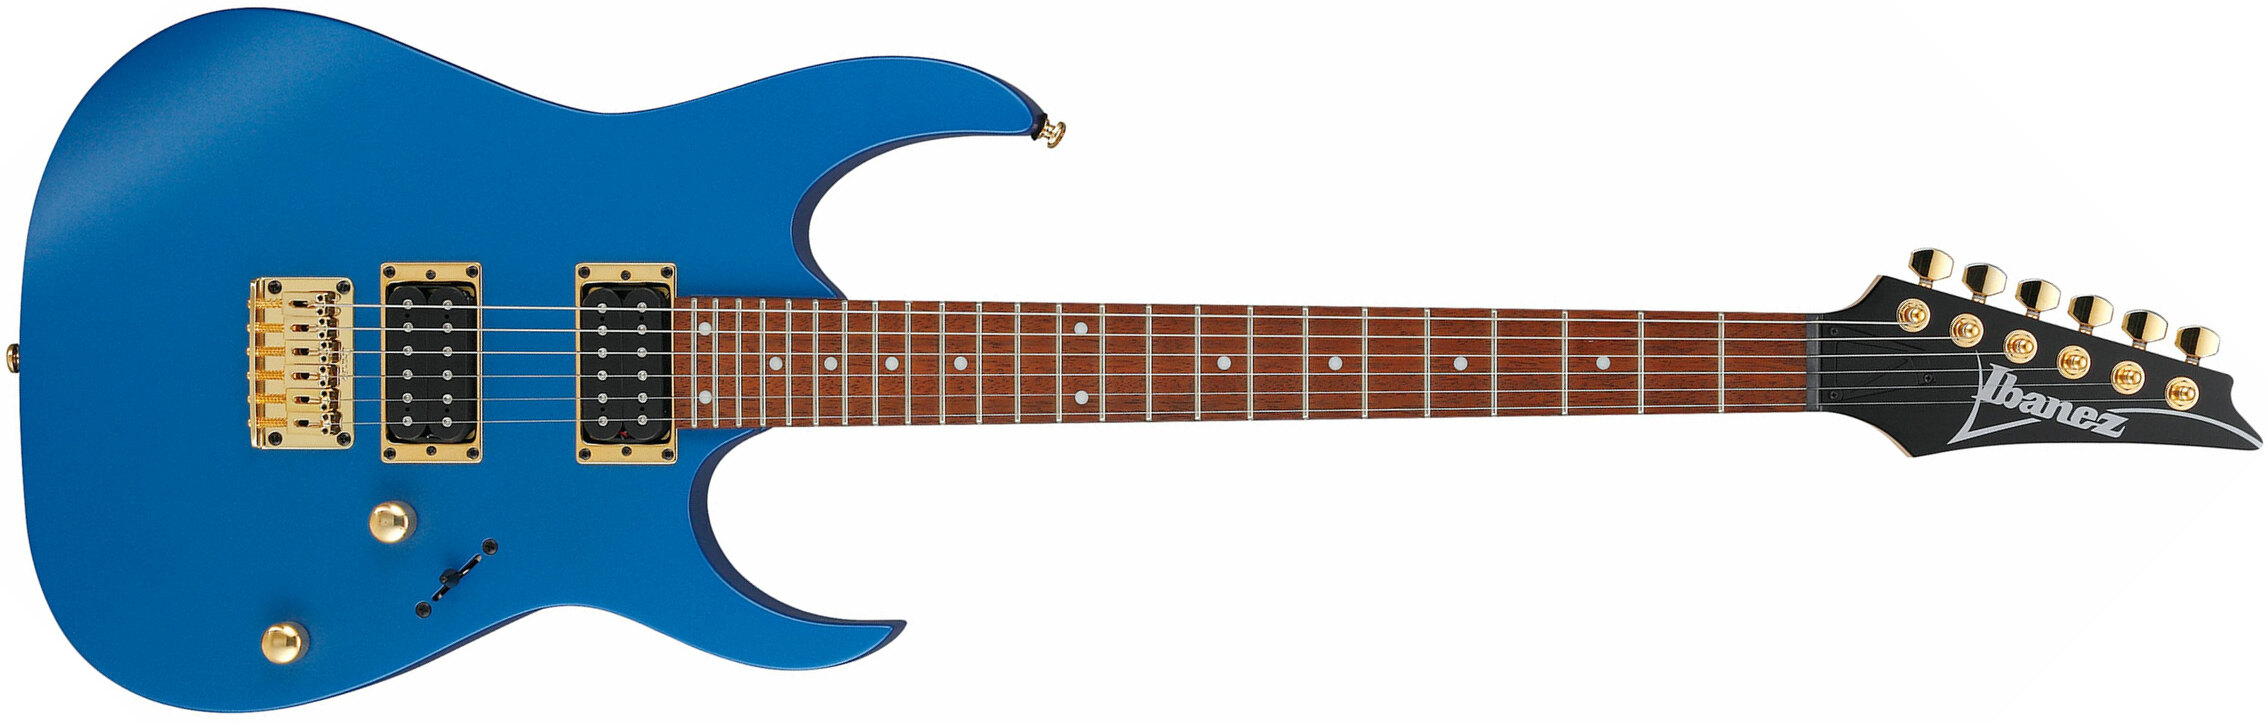 Ibanez Rg421g Lbm Standard Ht Hh Jat - Laser Blue Matte - Str shape electric guitar - Main picture